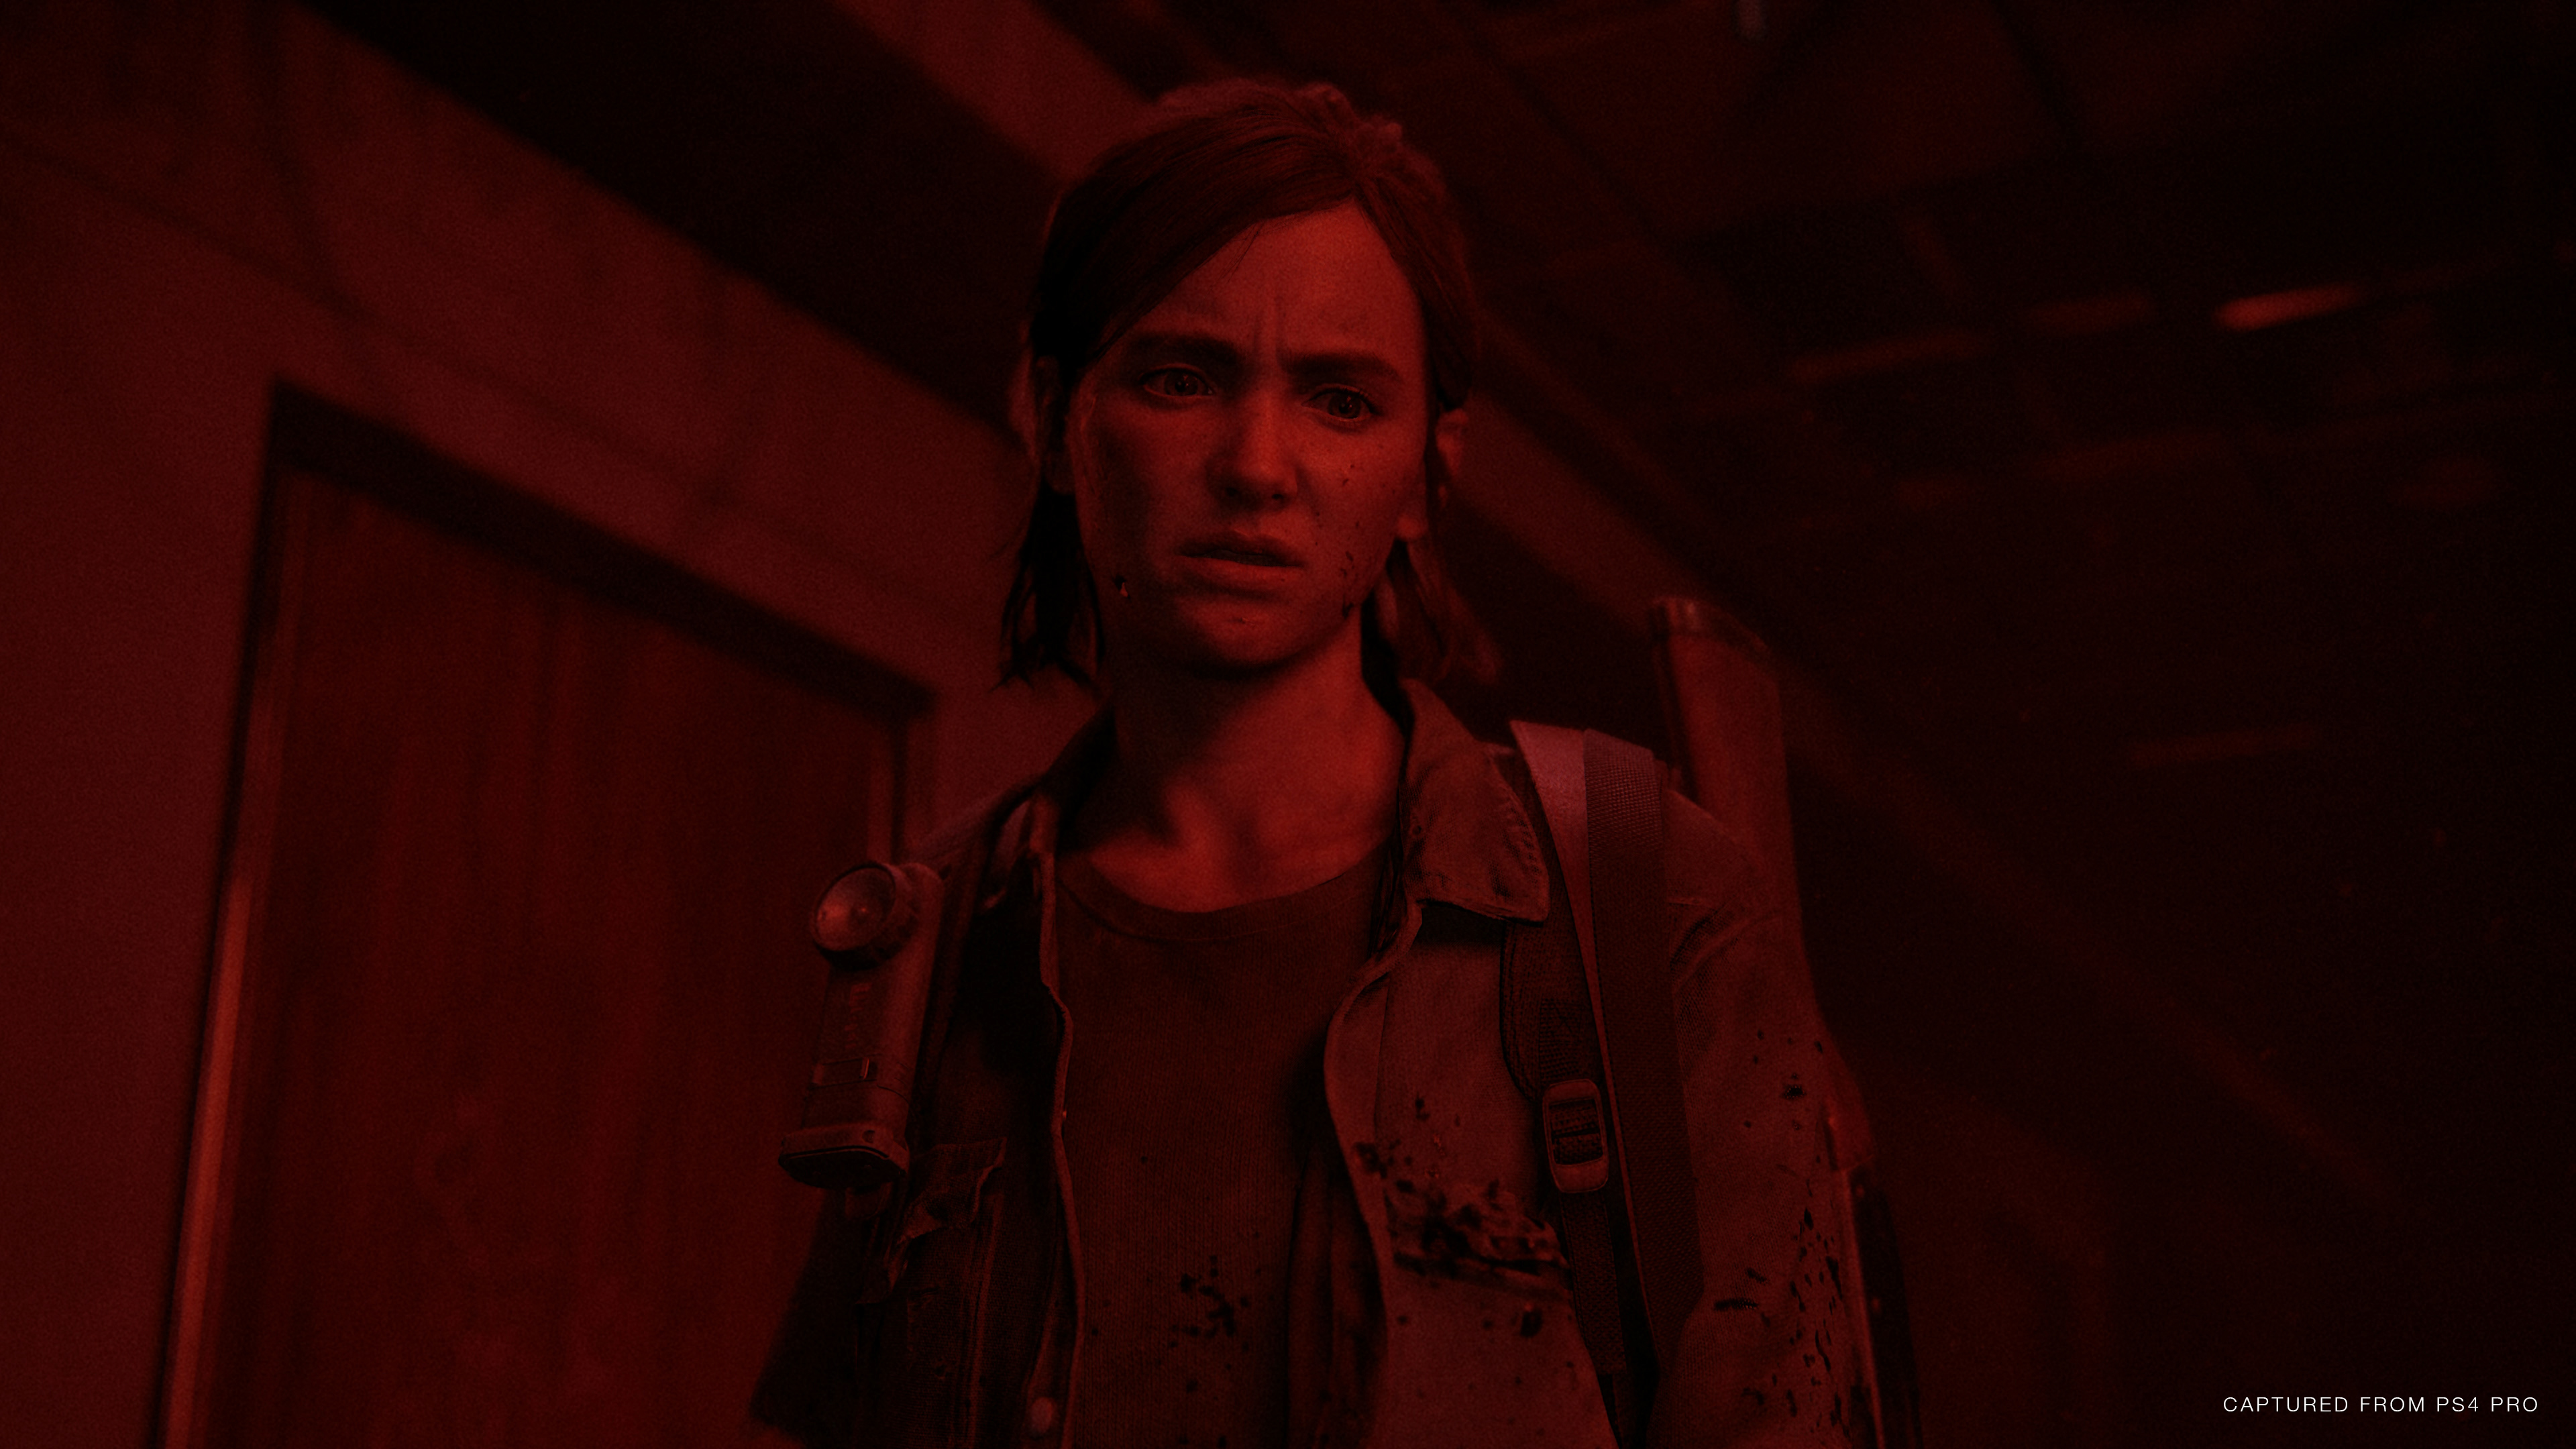 The Last of Us 2 wish list PS4